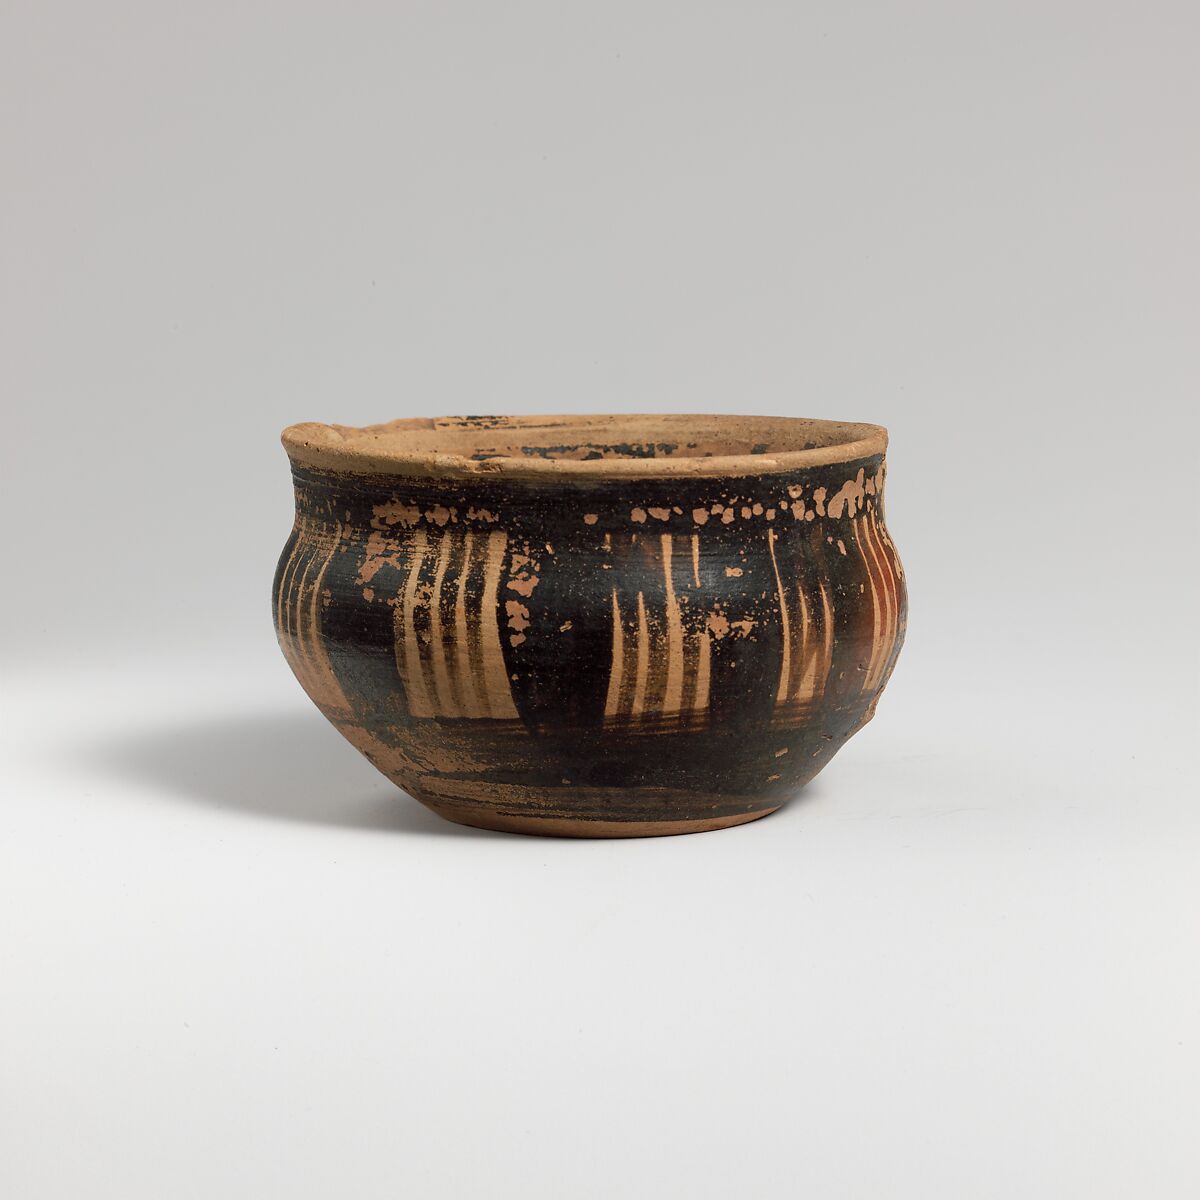 Terracotta one-handled cup, Terracotta, Greek, Attic 